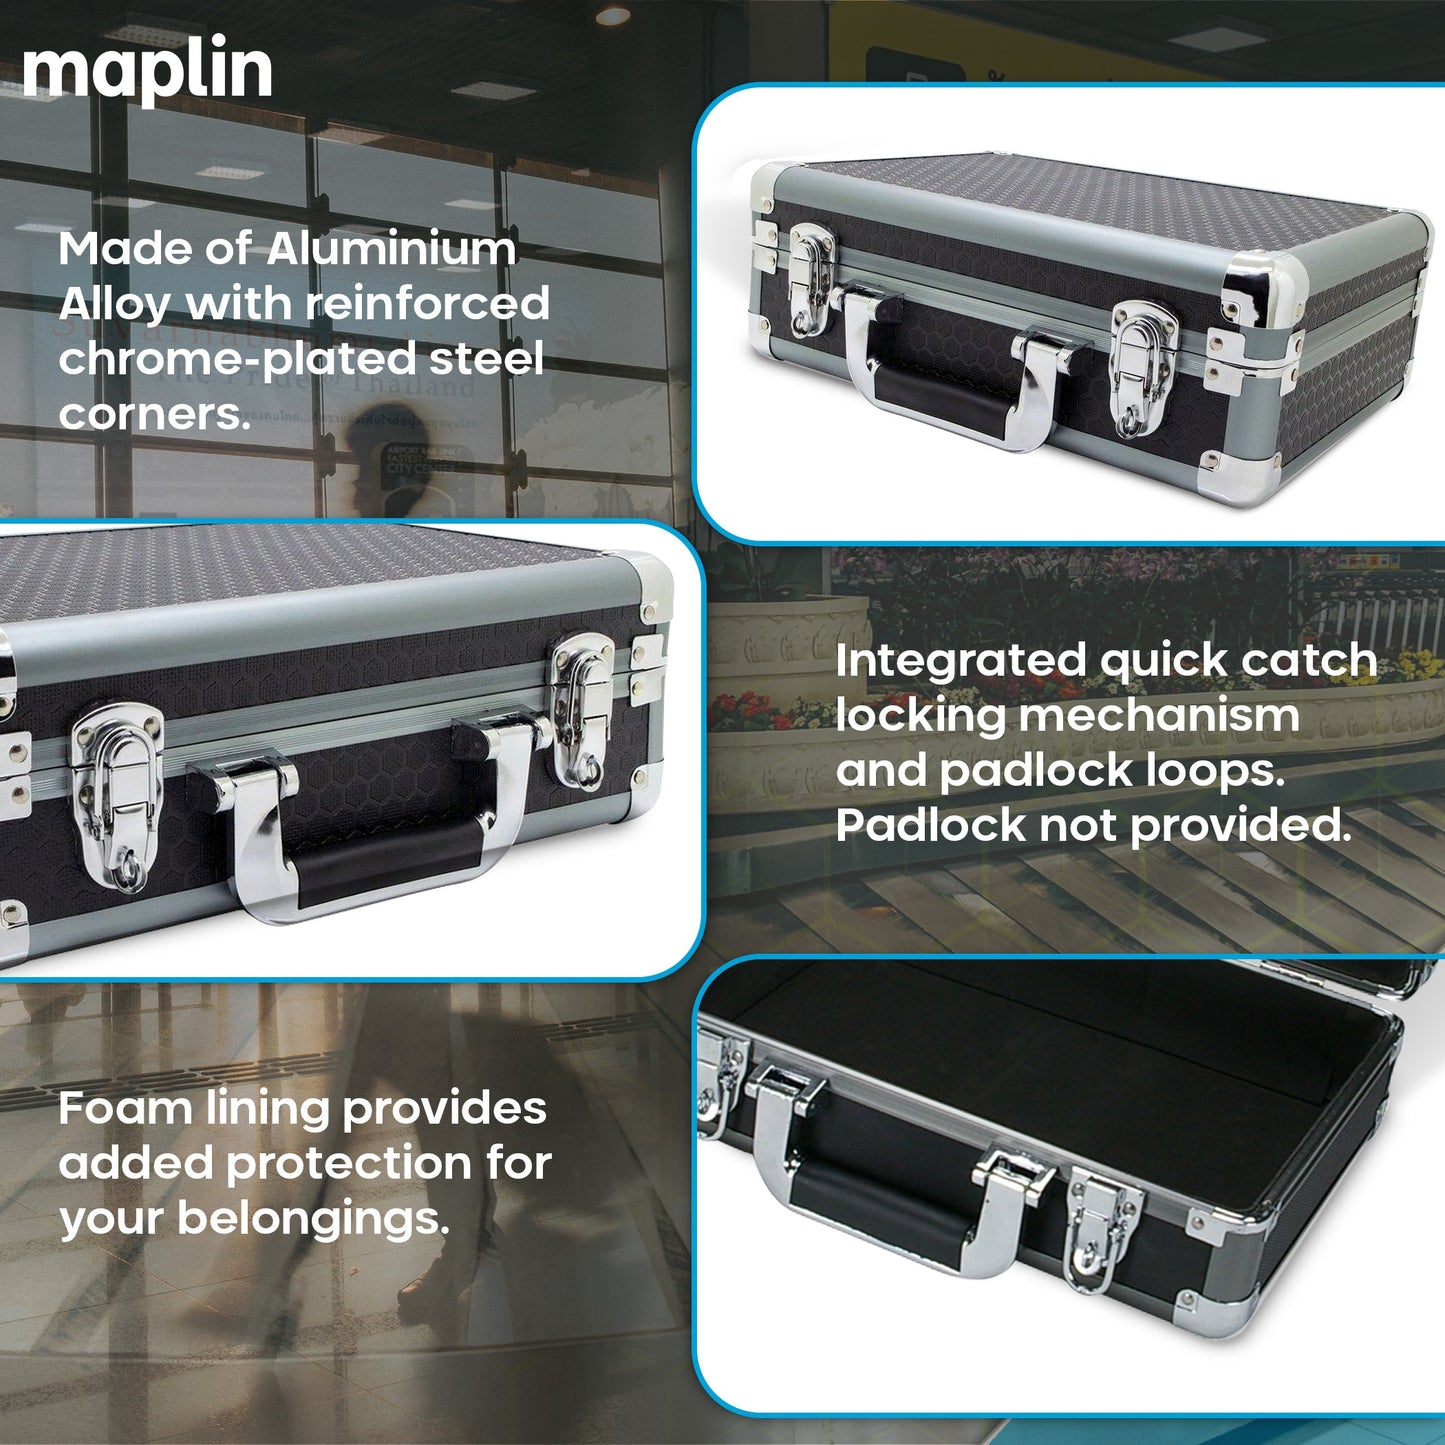 Maplin Plus Aluminium 120 x 340 x 240mm Flight Case - Black - maplin.co.uk